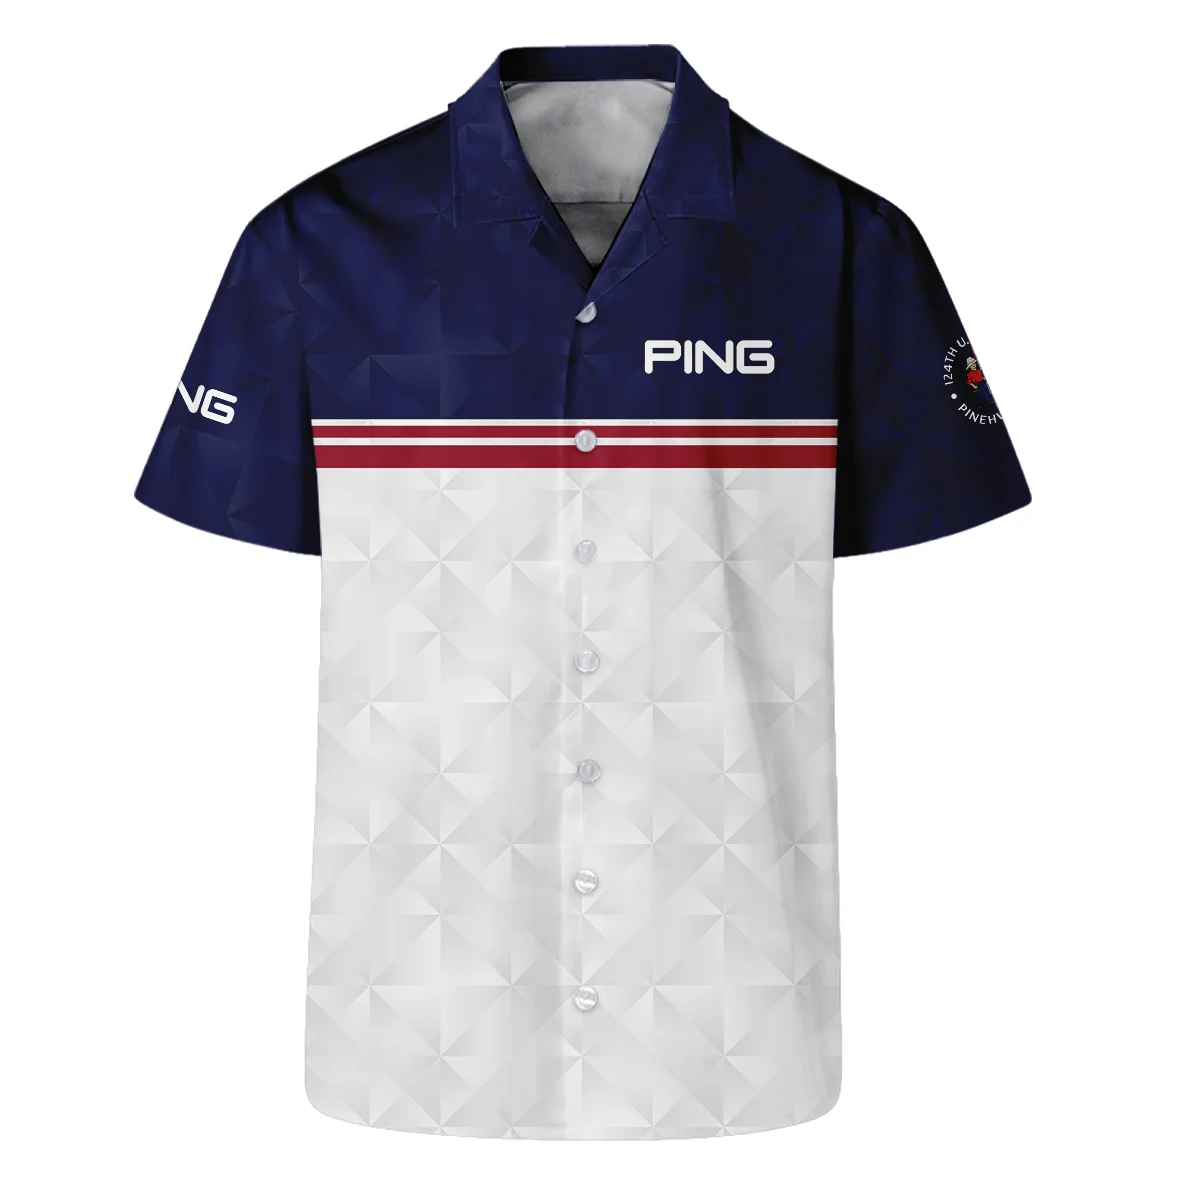 Golf Sport 124th U.S. Open Pinehurst Ping Zipper Polo Shirt Dark Blue White Abstract Geometric Triangles All Over Print Zipper Polo Shirt For Men